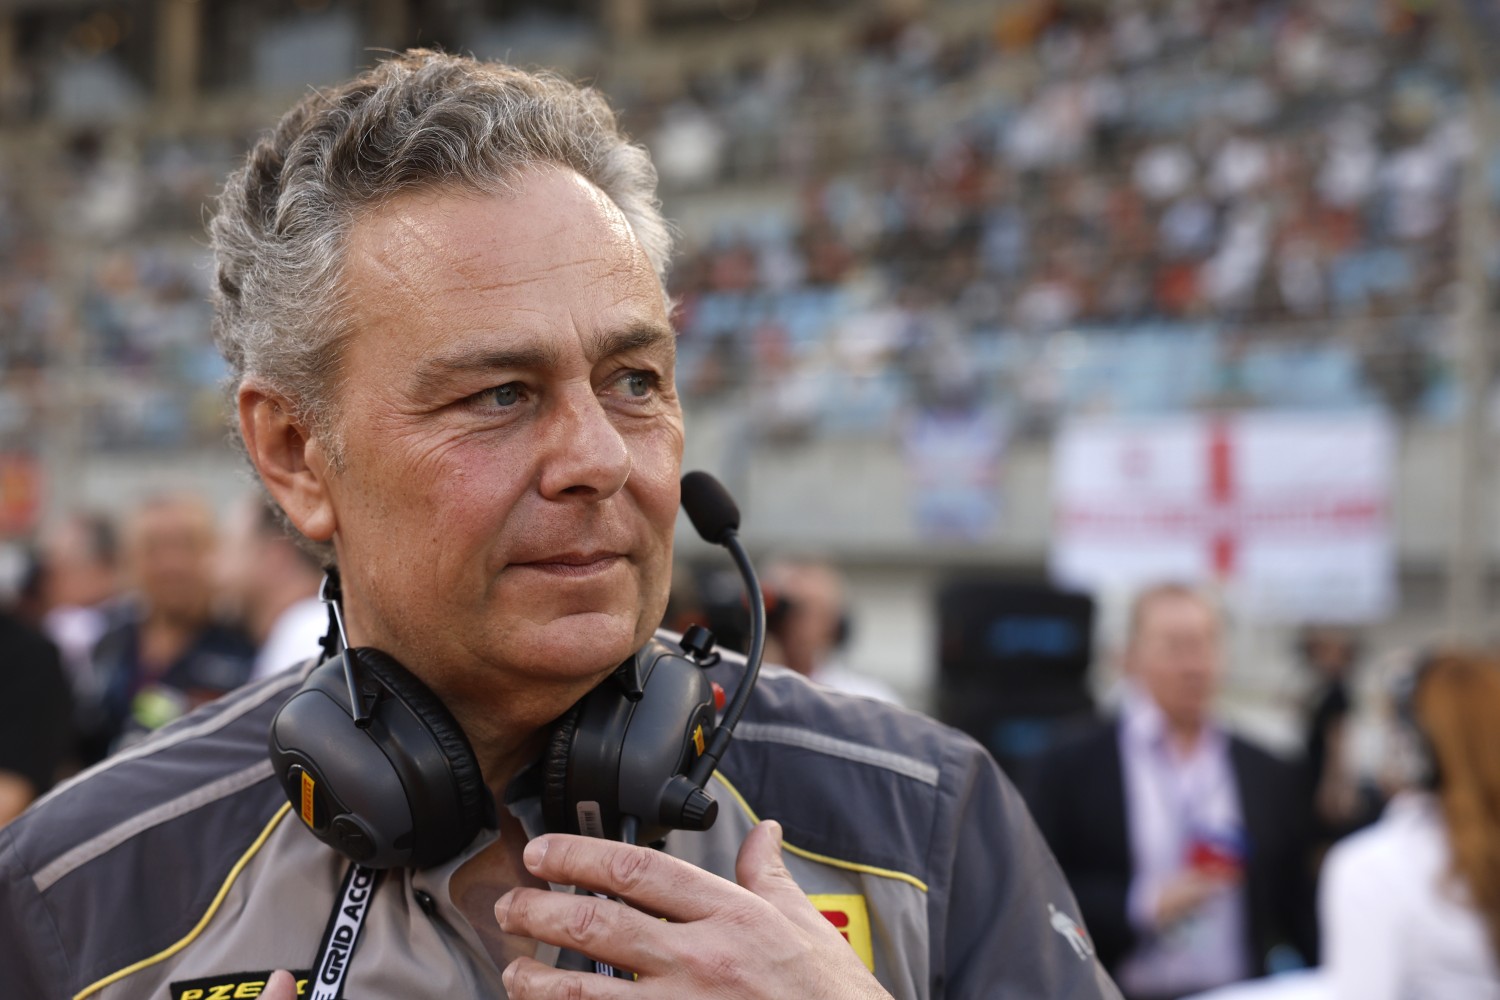 Mario Isola, Pirelli F1 boss